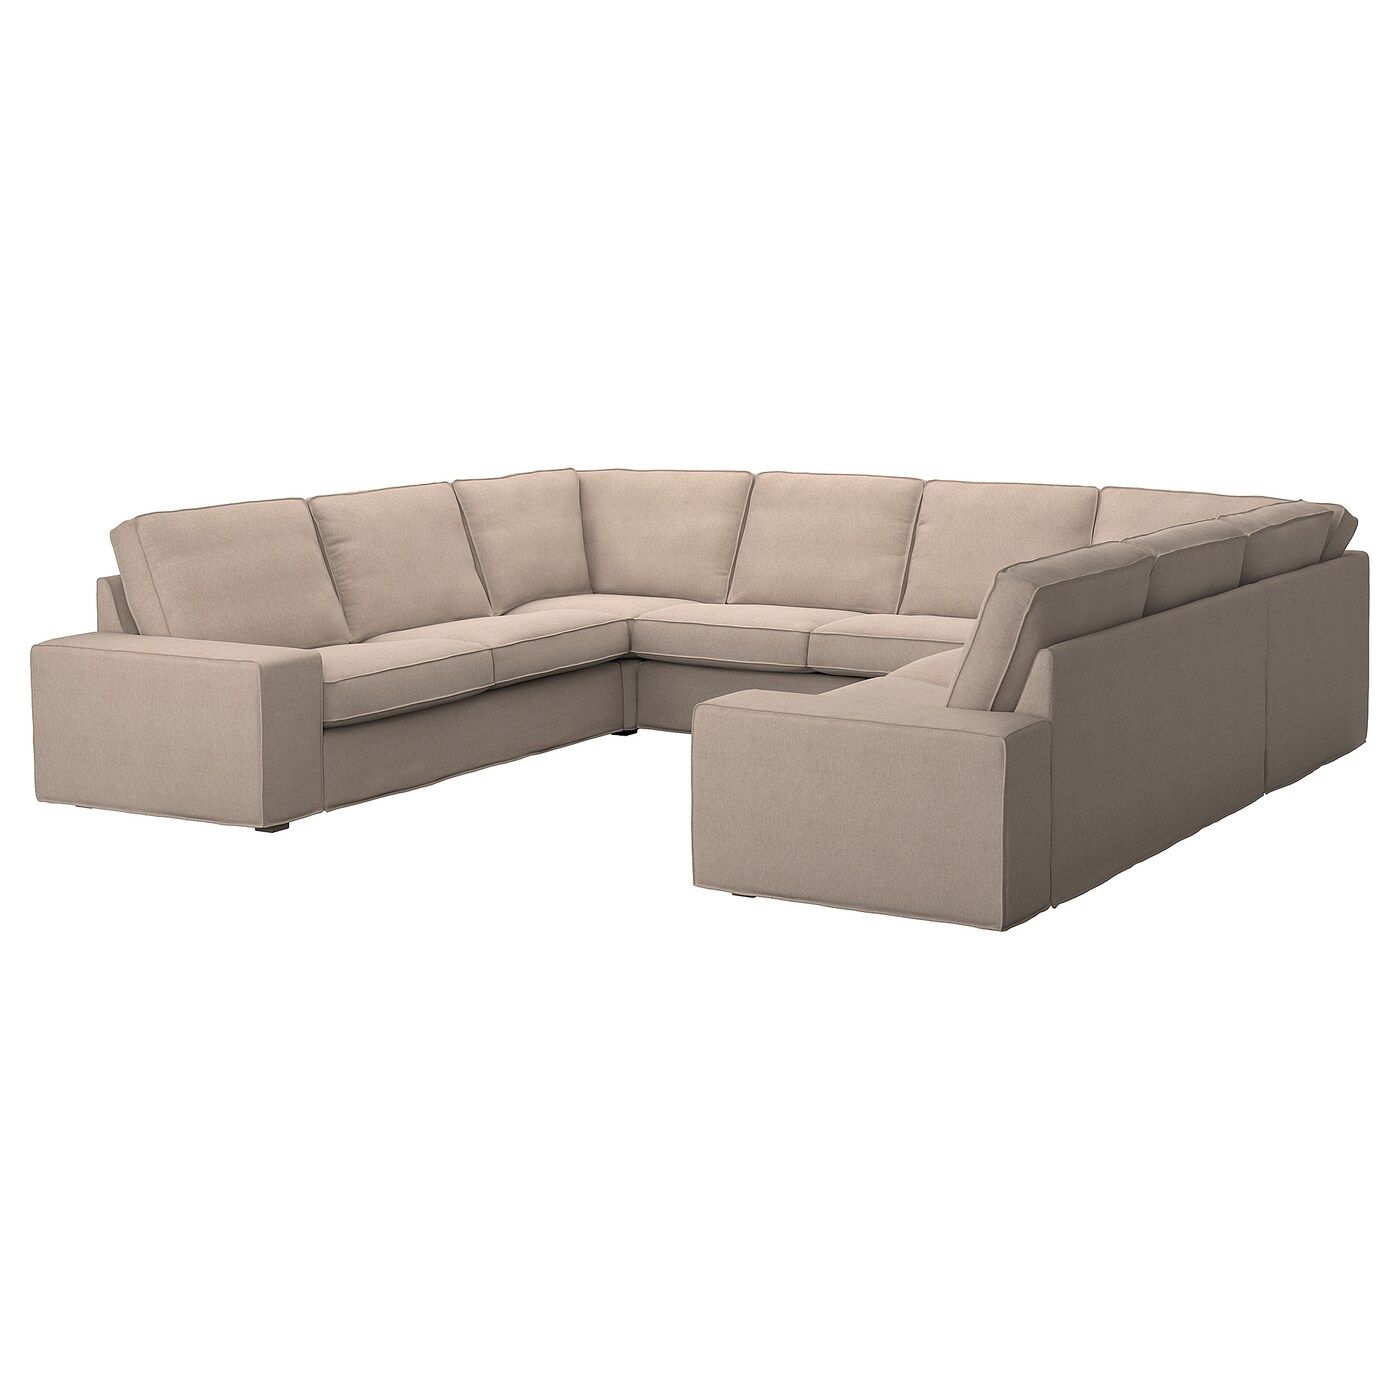 Kivik U Shaped Sofa, 6 Seat, Tallmyra Beige – Ikea Austria Inside U Shaped Couches In Beige (View 11 of 15)